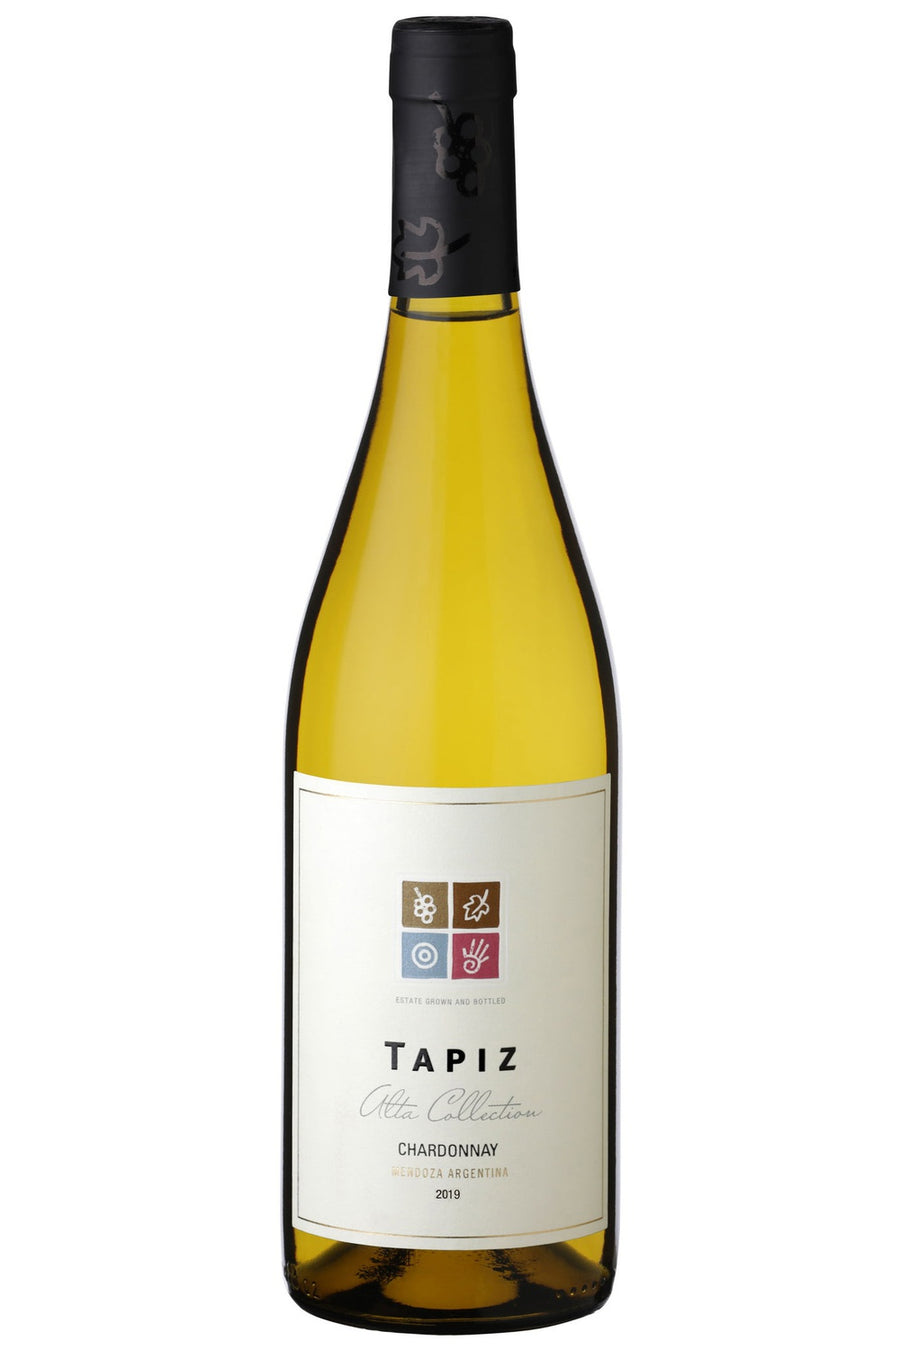 Tapiz 'Alta Collection' Chardonnay 2020